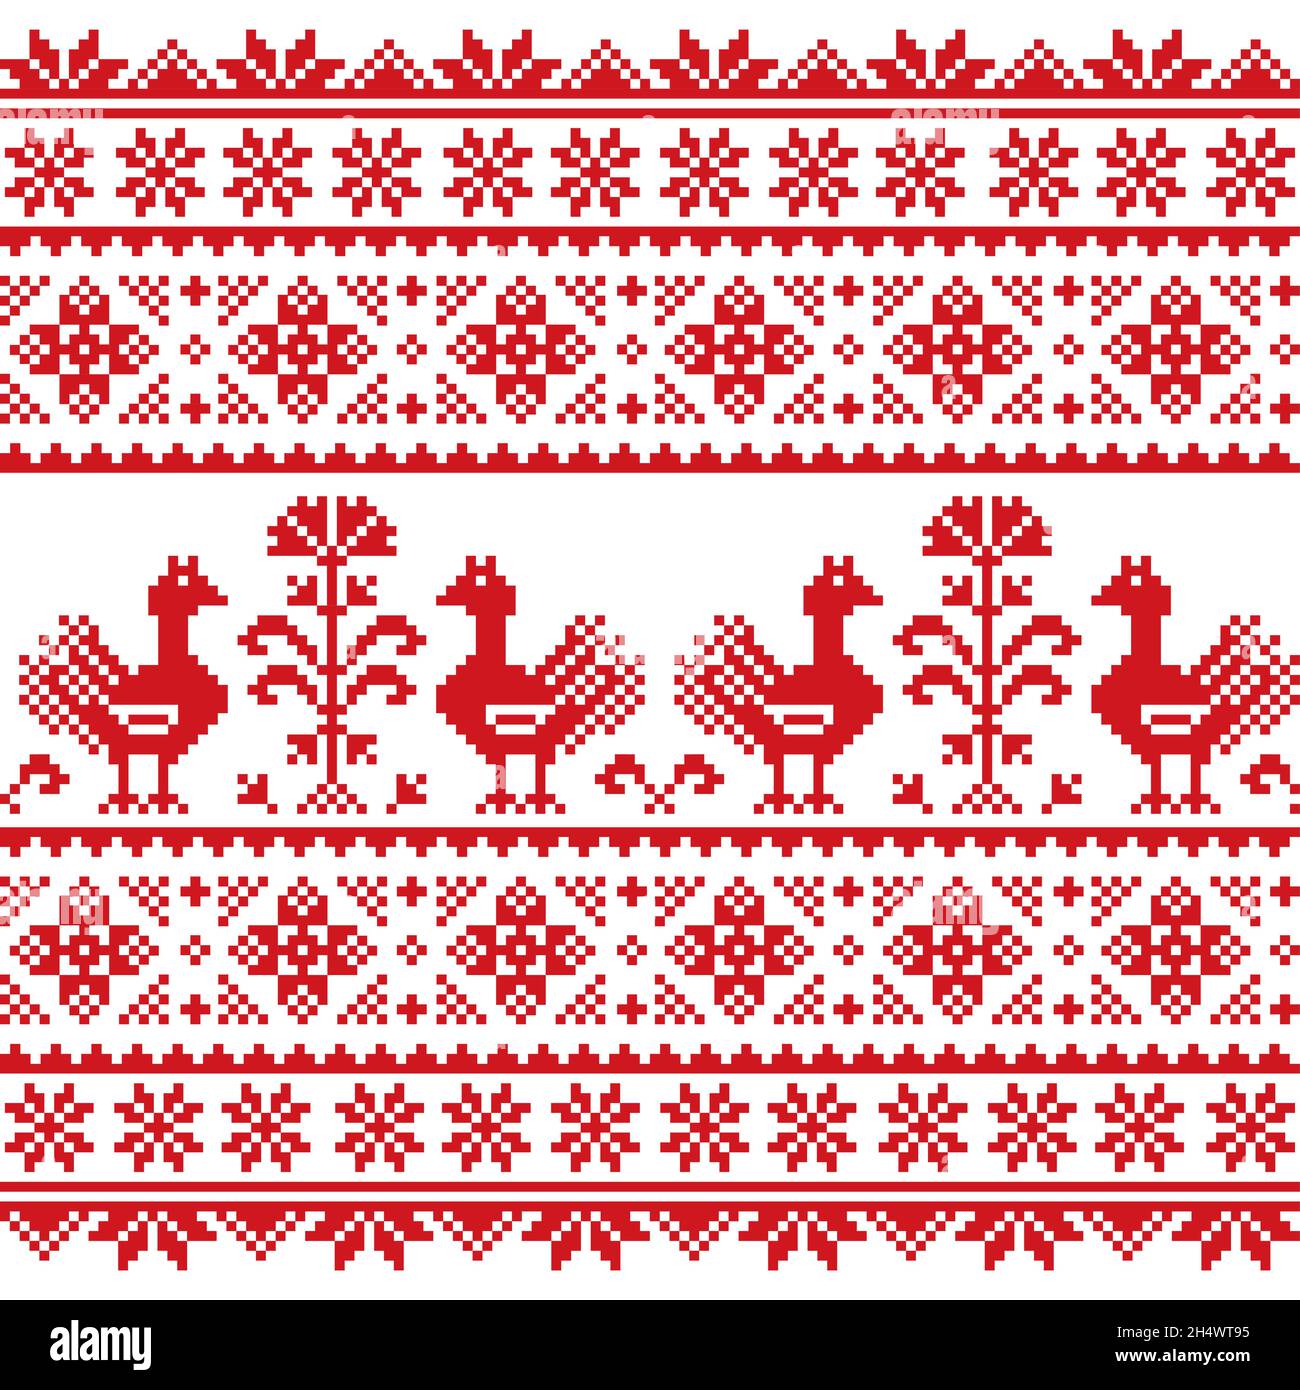 Ukrainian, Belarusian folk art vector seamless pattern with flowers and brids, red cross-stitch ornament inspired by folk art - Vyshyvanka Stock Vector